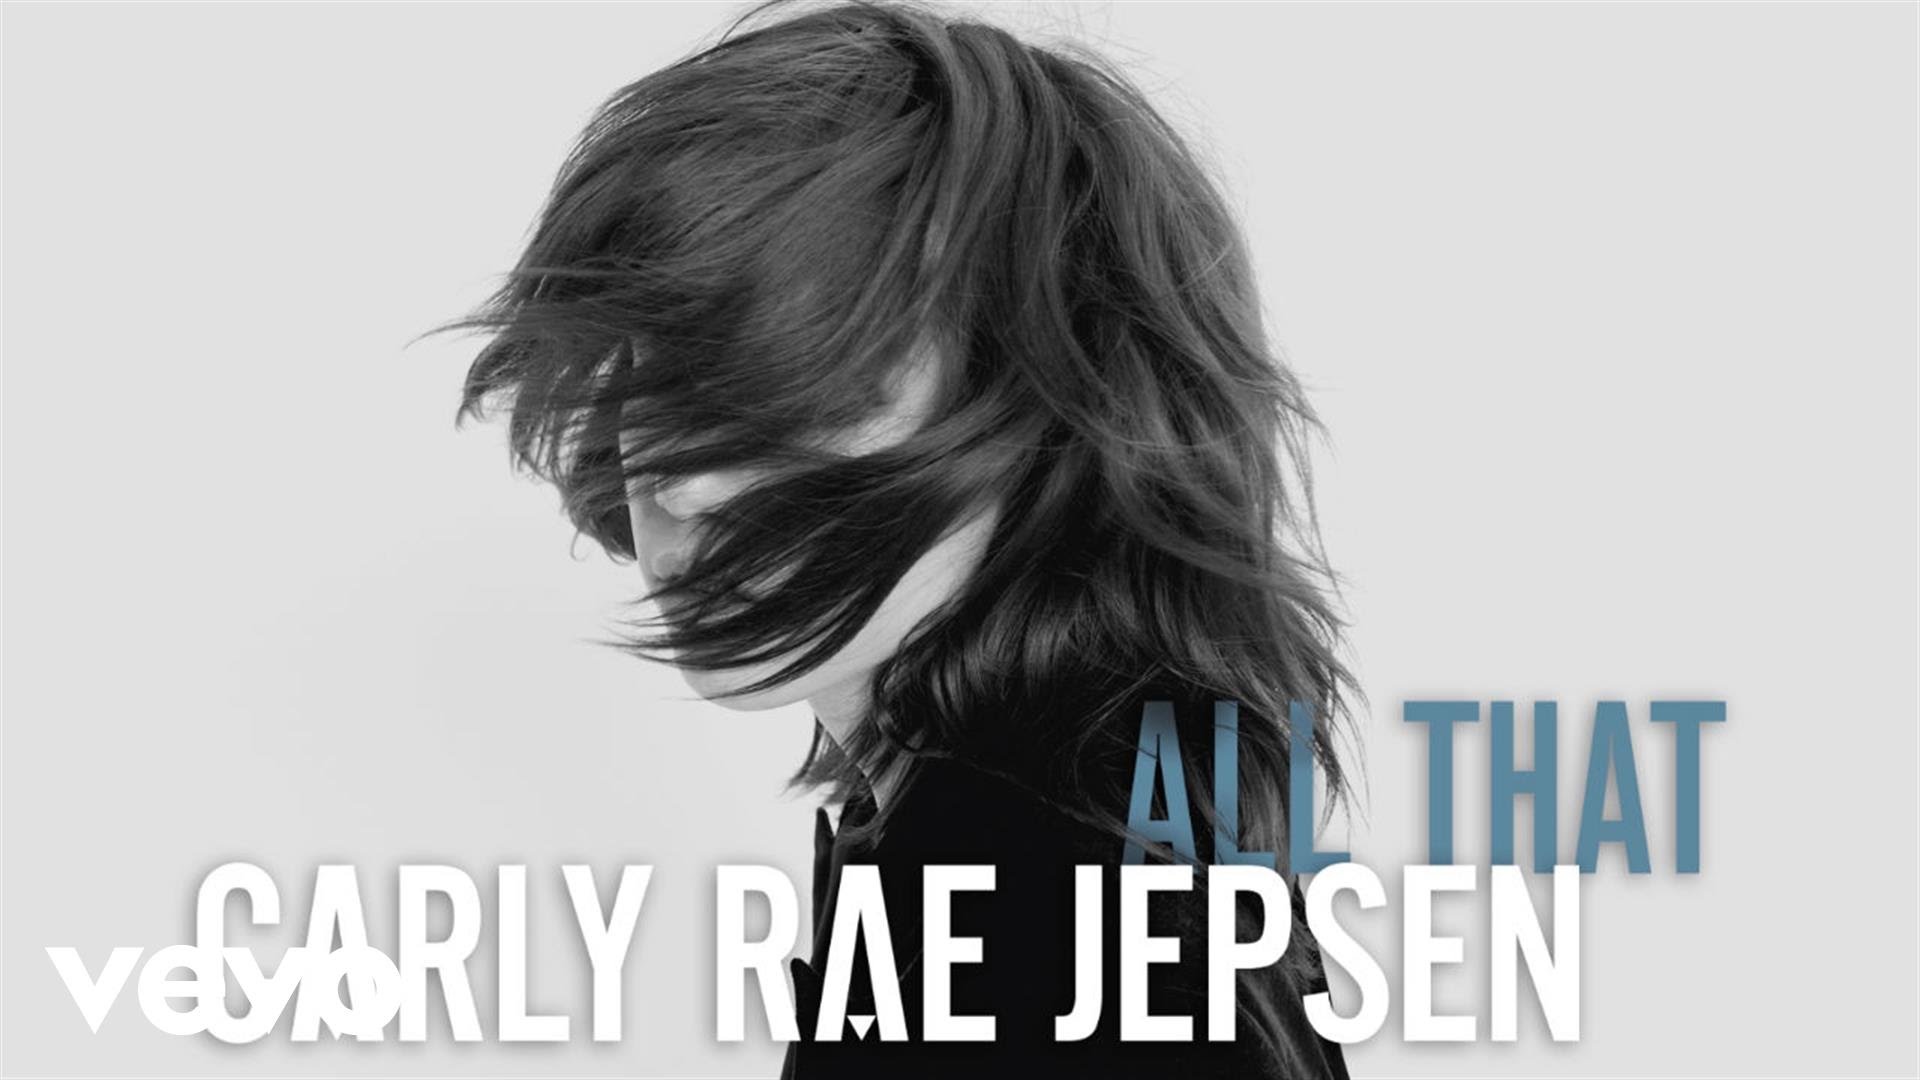 Carly Rae Jepsen - All that